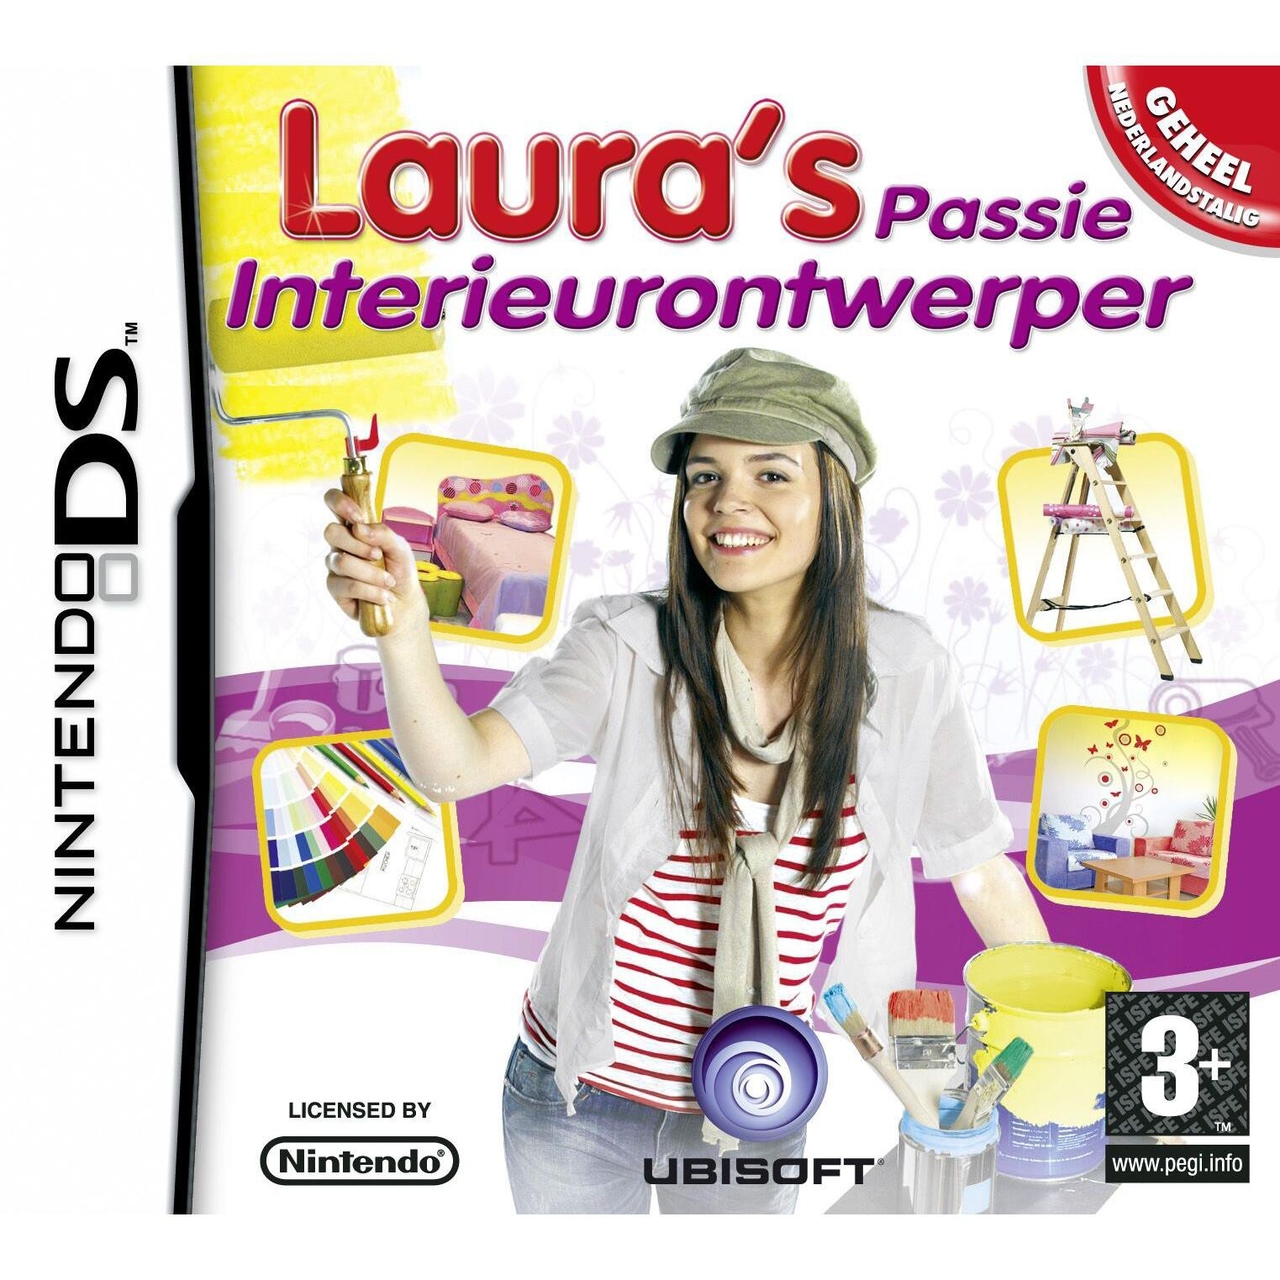 Laura's Passie Interieurontwerpster - Nintendo DS Games